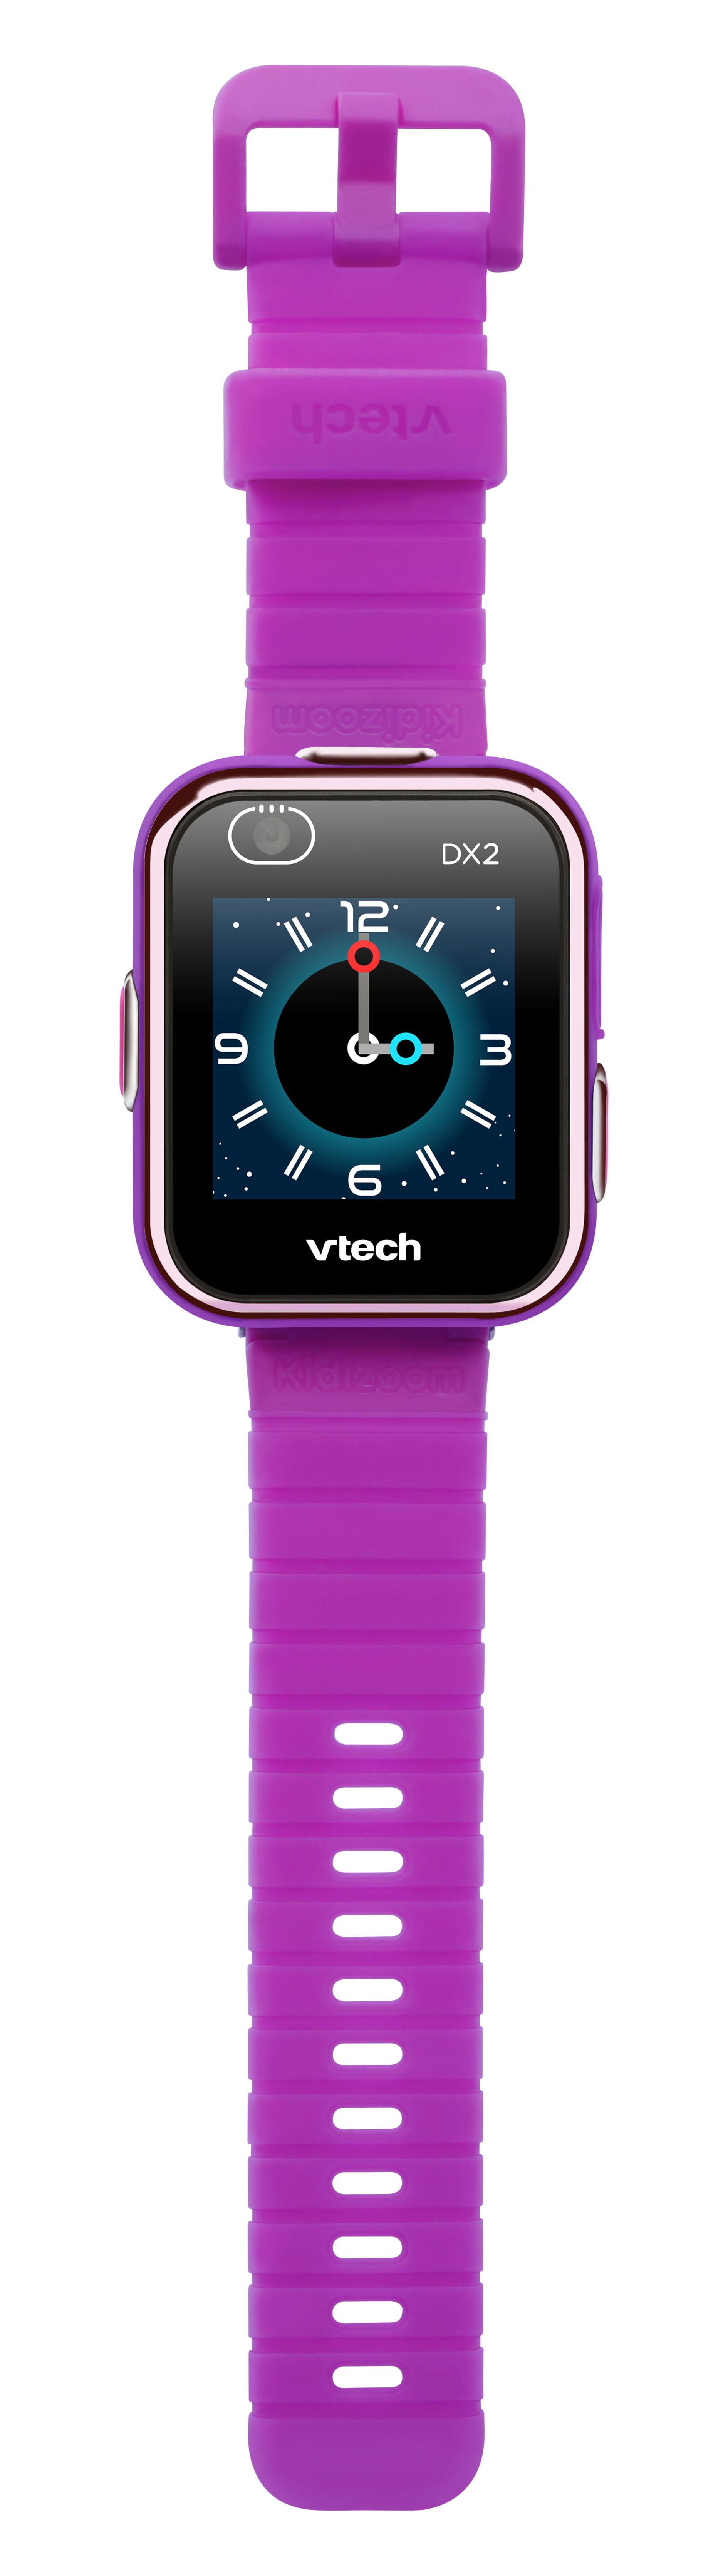 VTECH - Kidizoom smartwatch dx2 rose - Dès 5 ans - Super U, Hyper